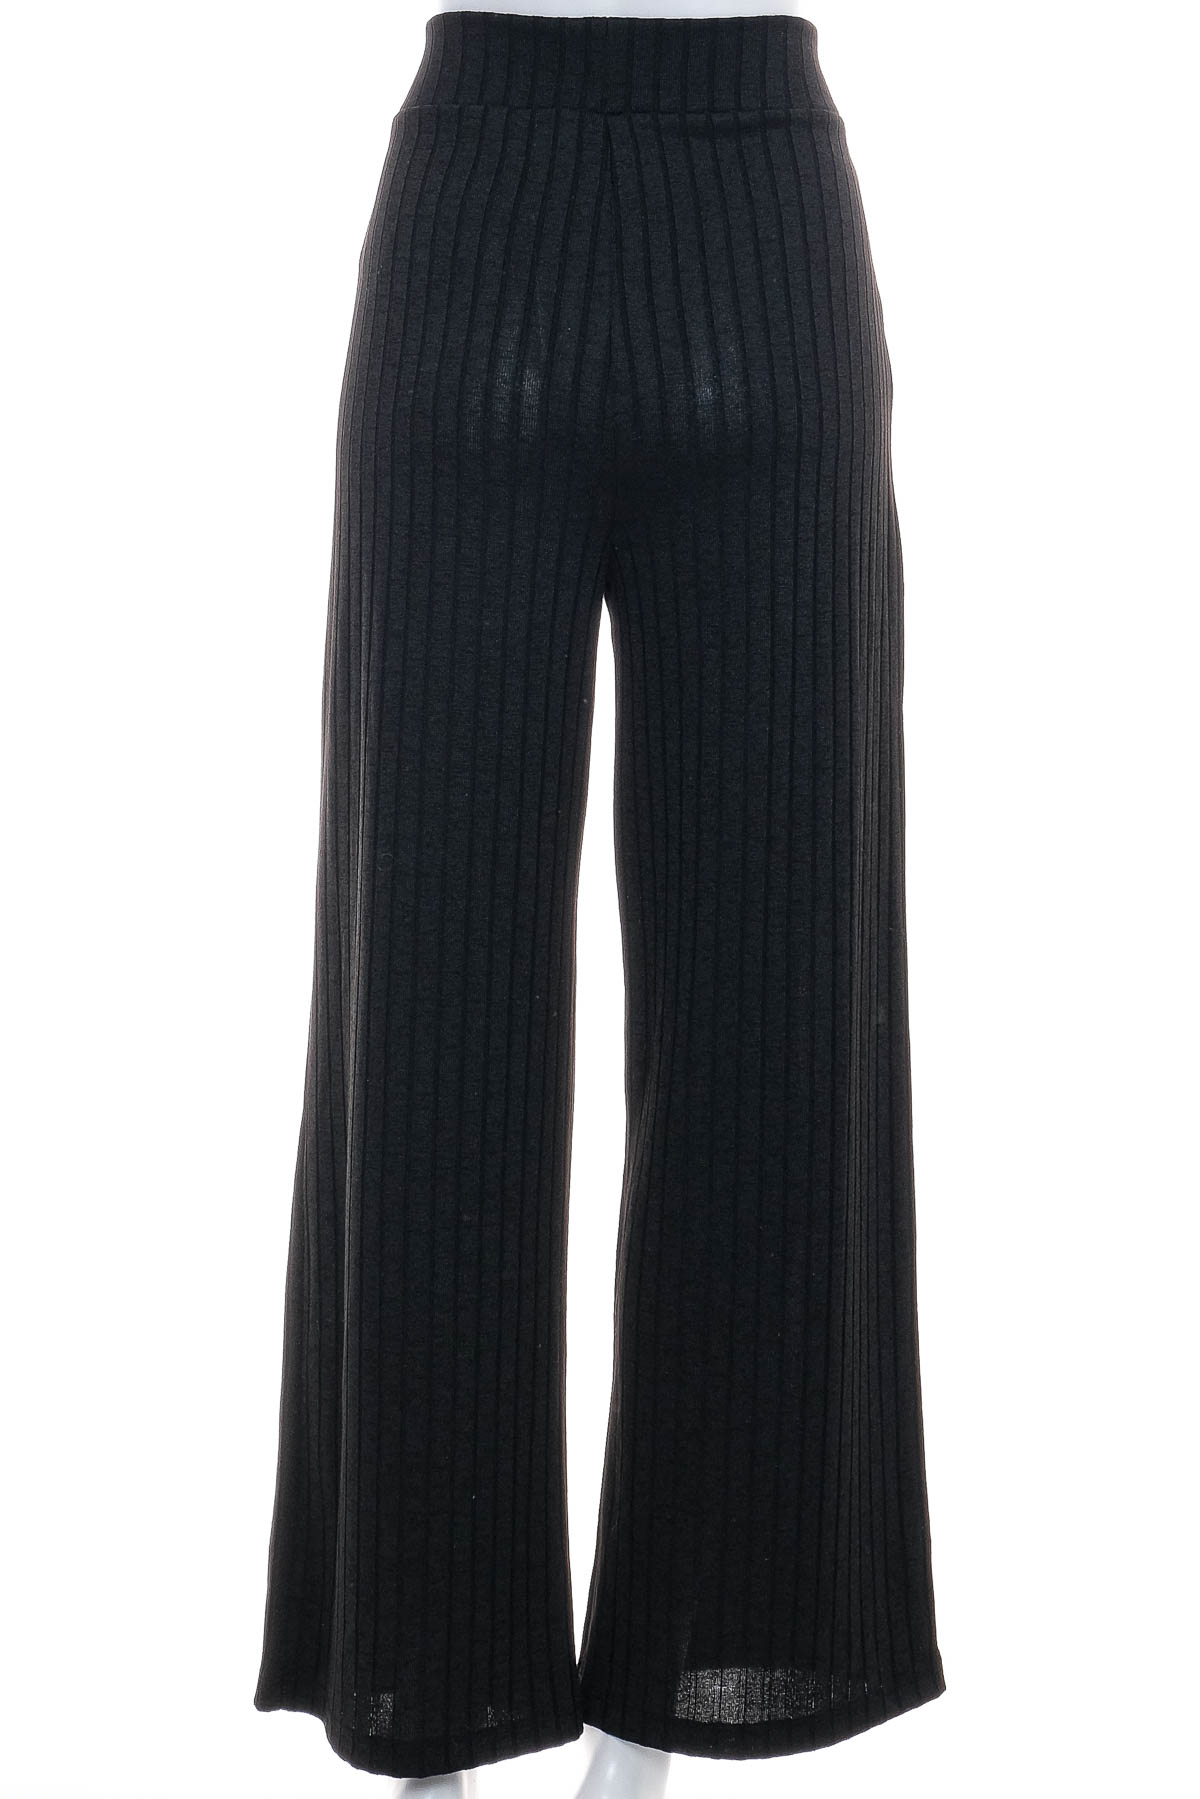 Women's trousers - NA-KD - 1